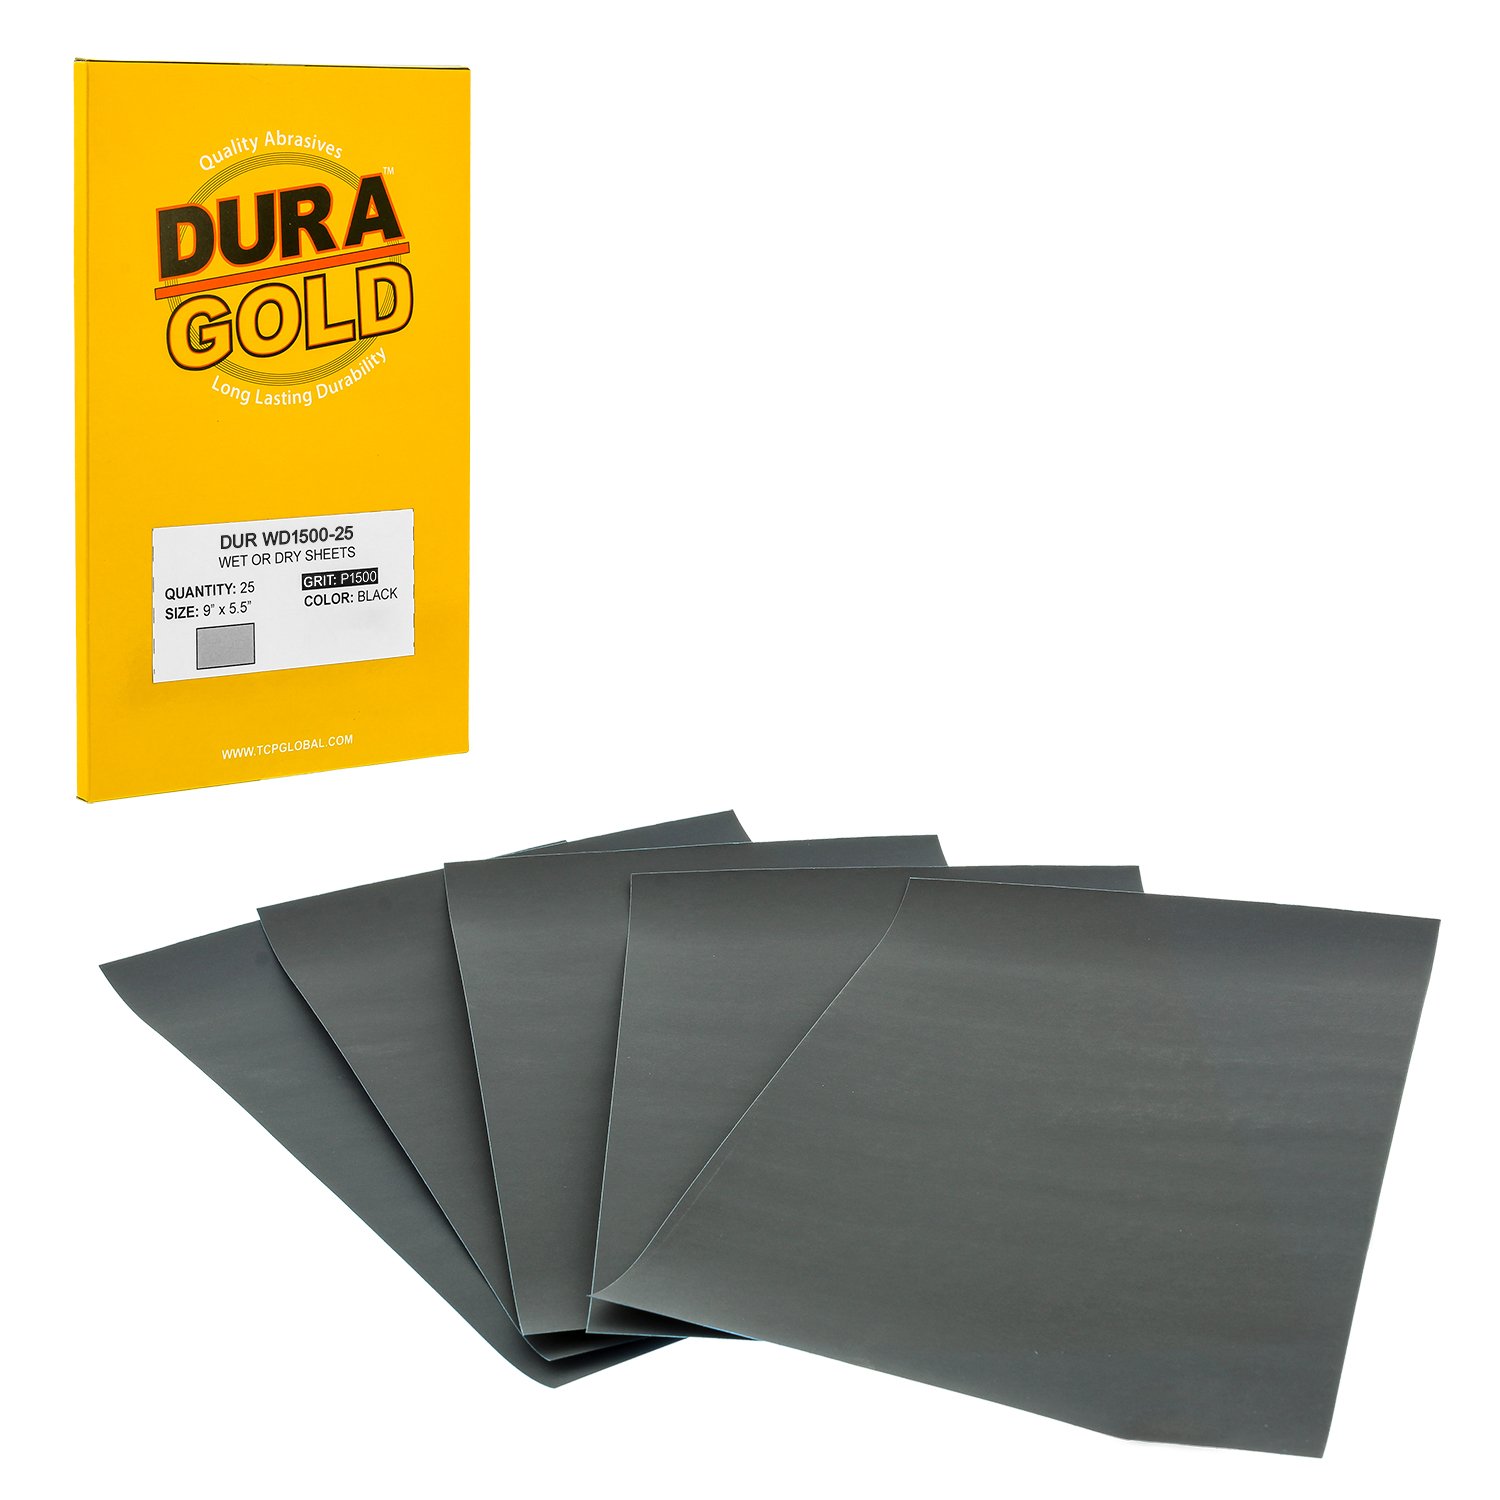 Dura-Gold Premium 1500 Grit Wet or Dry Sandpaper Sheets, 5-1/2" x 9", Box of 25 - Car Color Sanding, Detailing, Polishing Automo